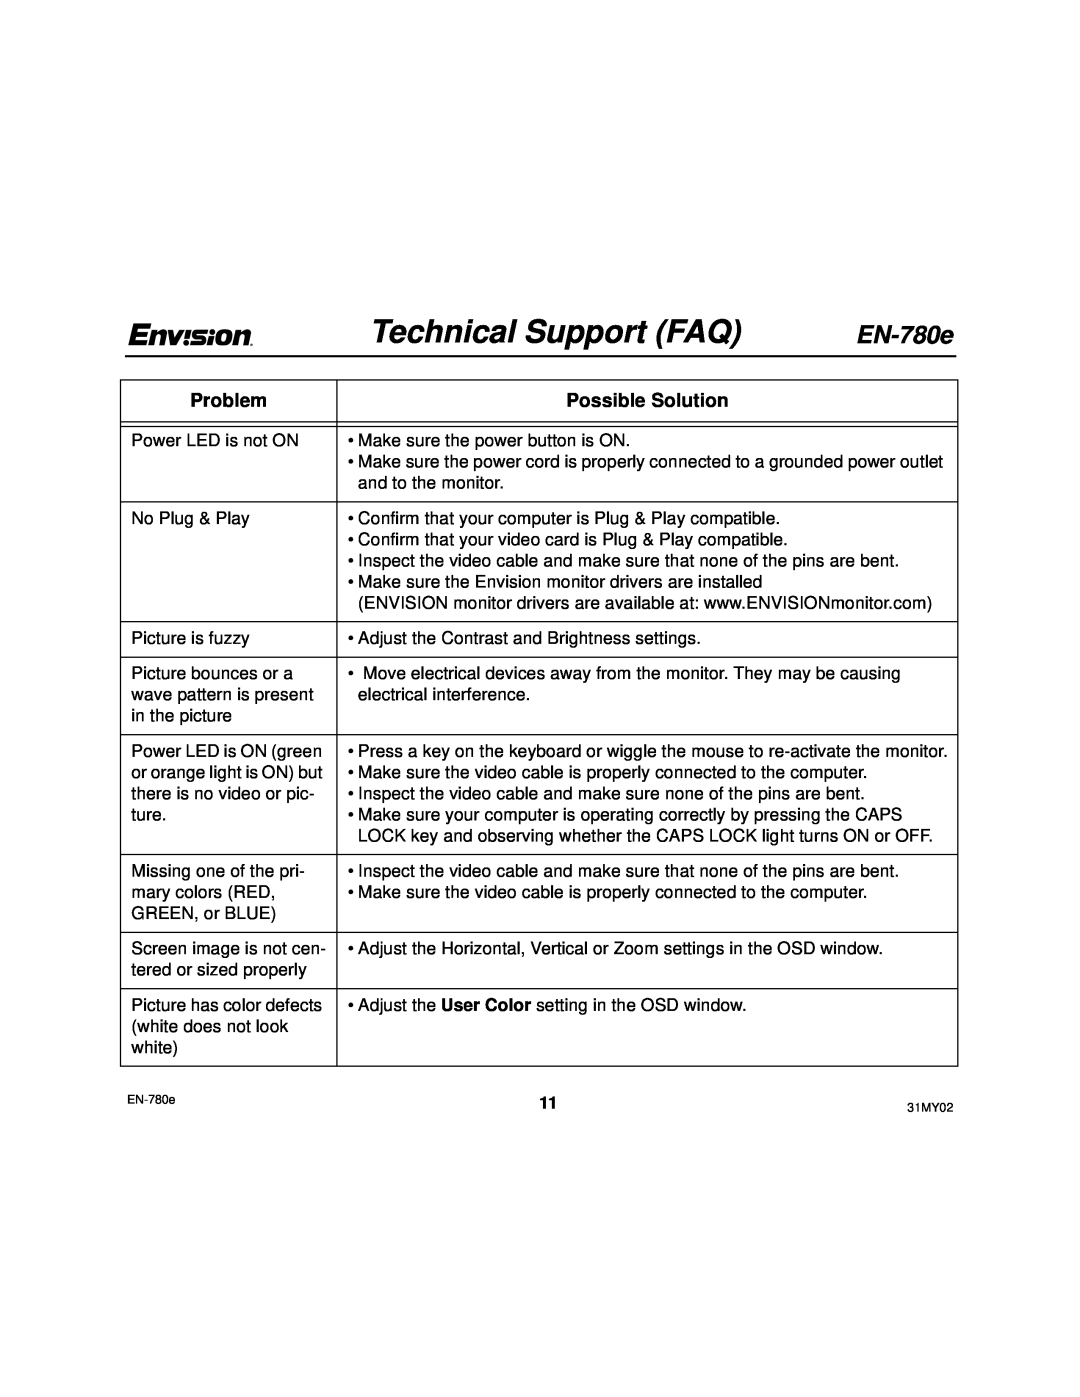 Envision Peripherals EN-780e 17, EN-780e_31MY02 user manual Technical Support FAQ, Problem, Possible Solution 